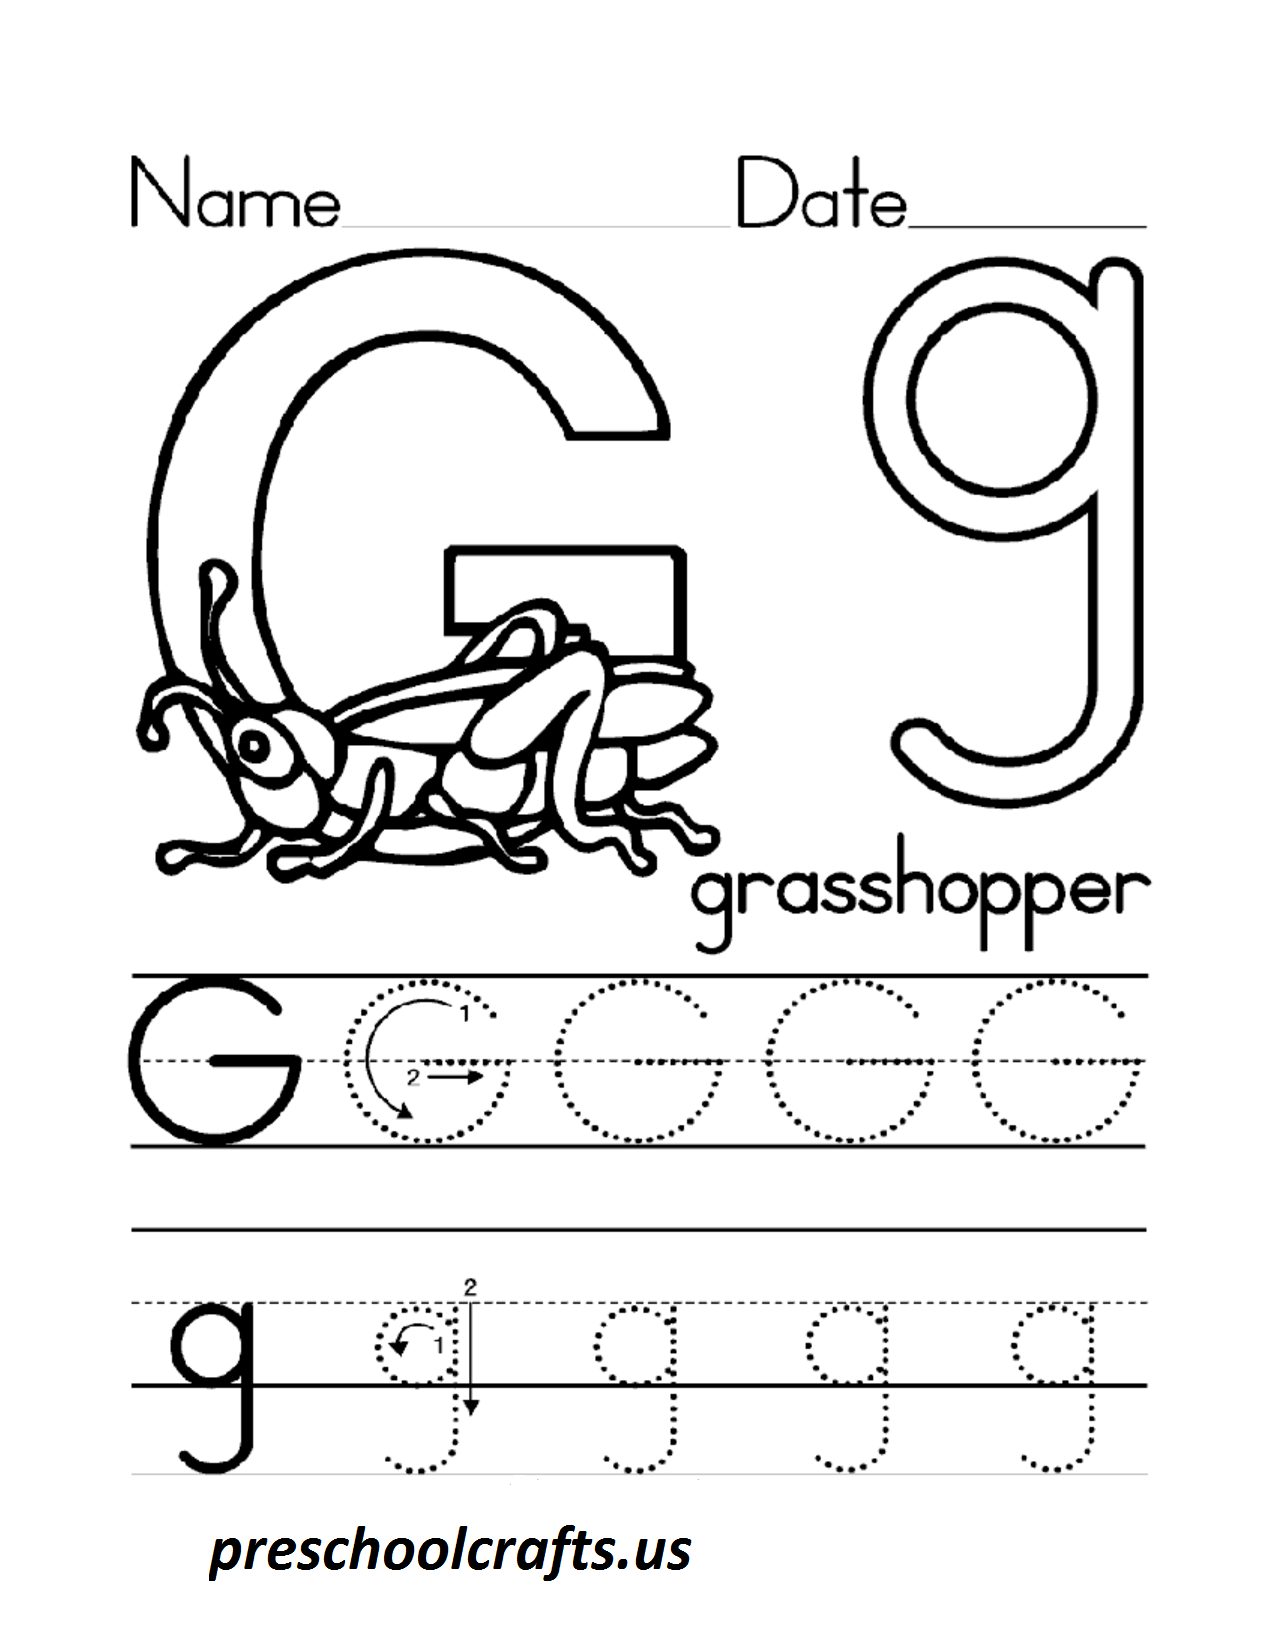 Letter g worksheets for preschool Preschool Crafts